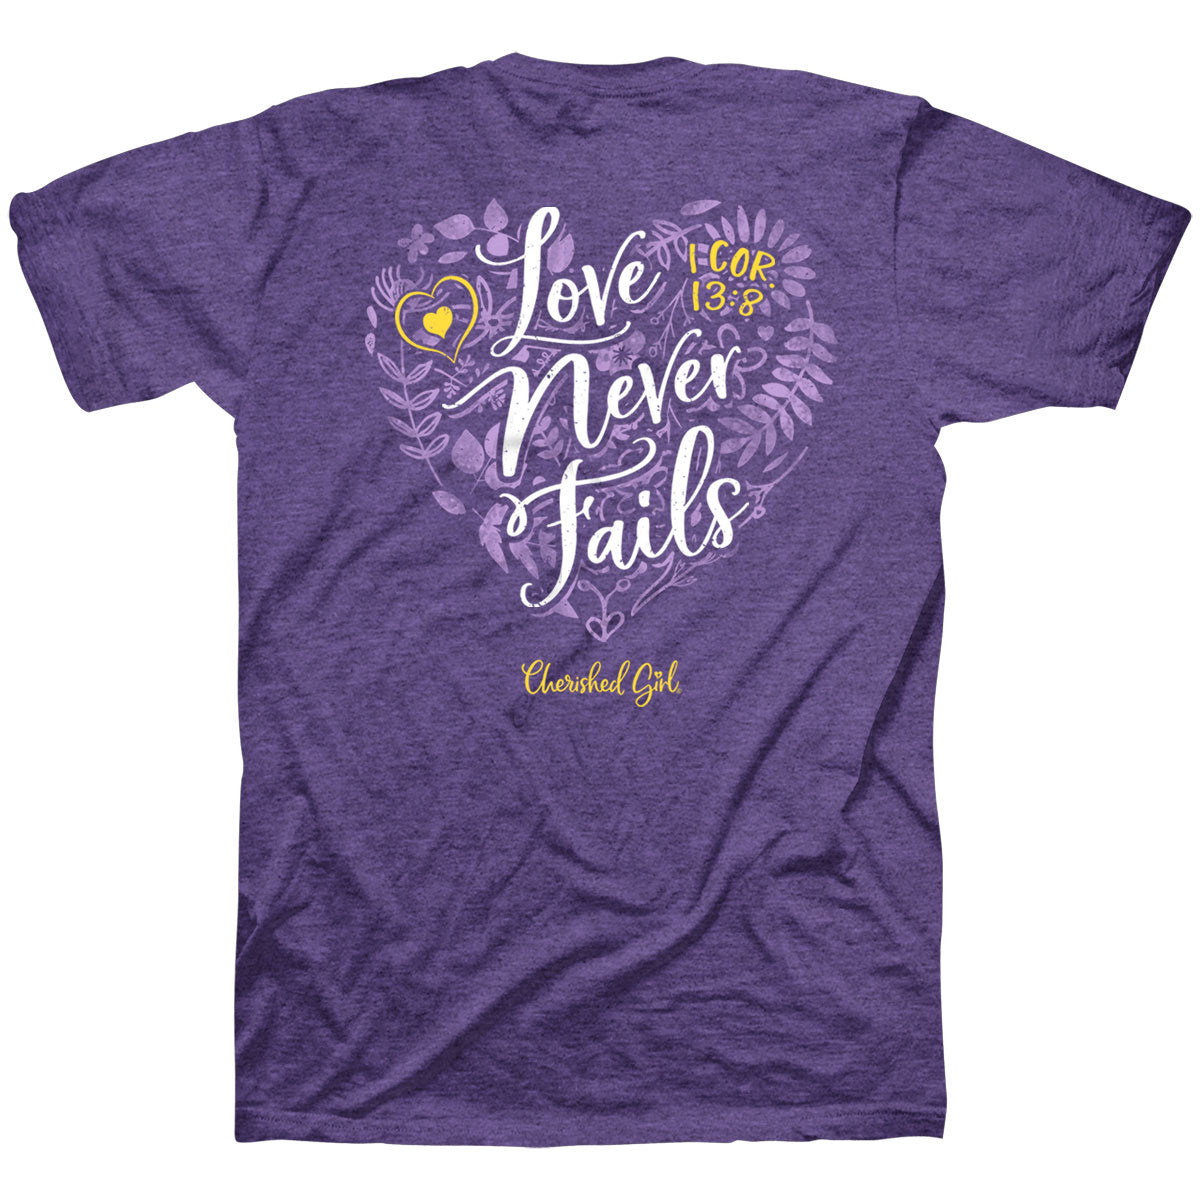 Cherished Girl Womens T-Shirt Love Never Fails